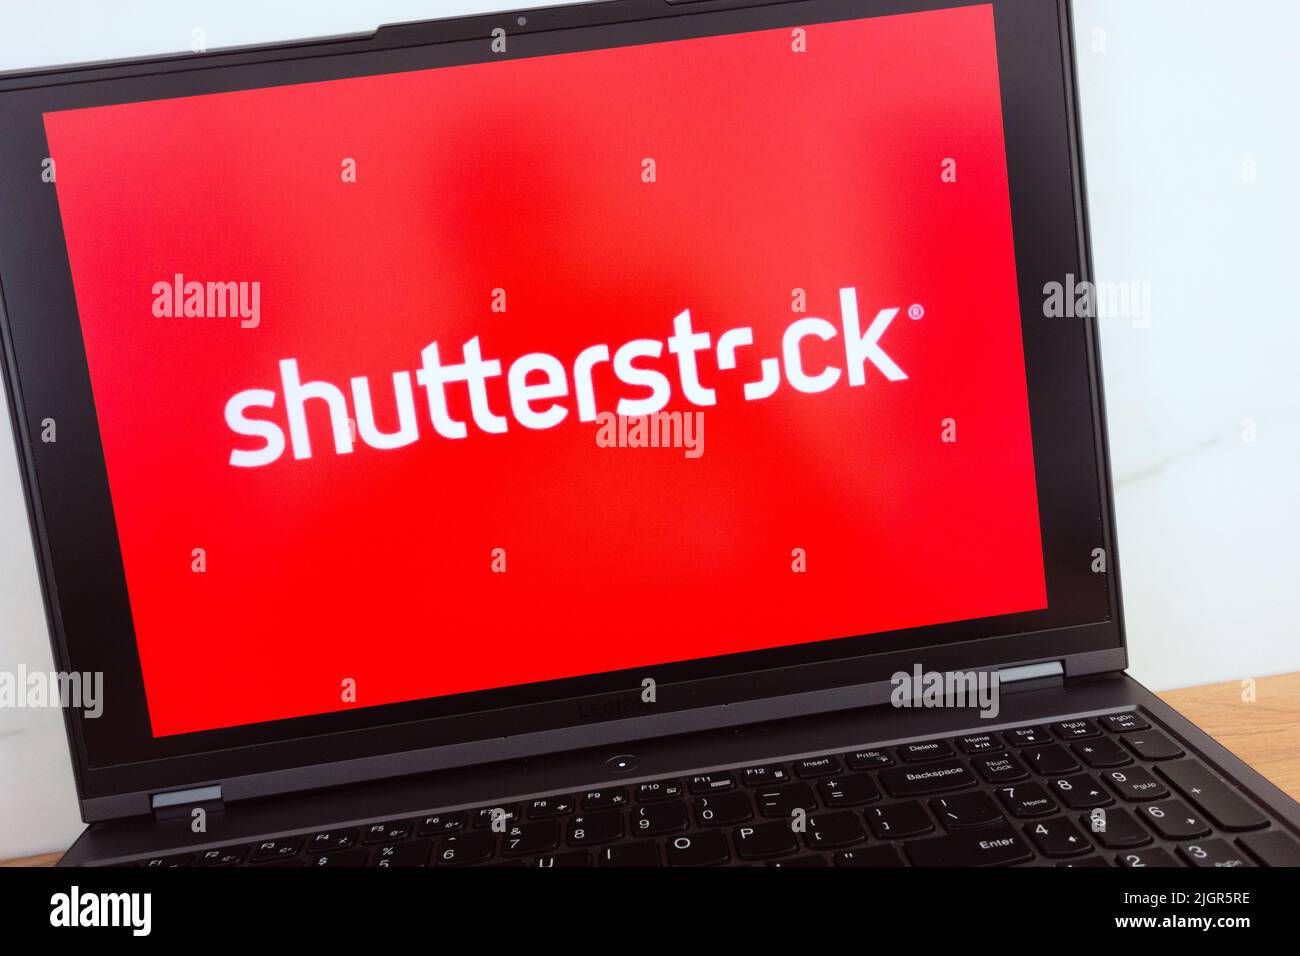 KONSKIE, POLAND - July 11, 2022: Shutterstock stock photography website logo displayed on laptop computer screen Stock Photo